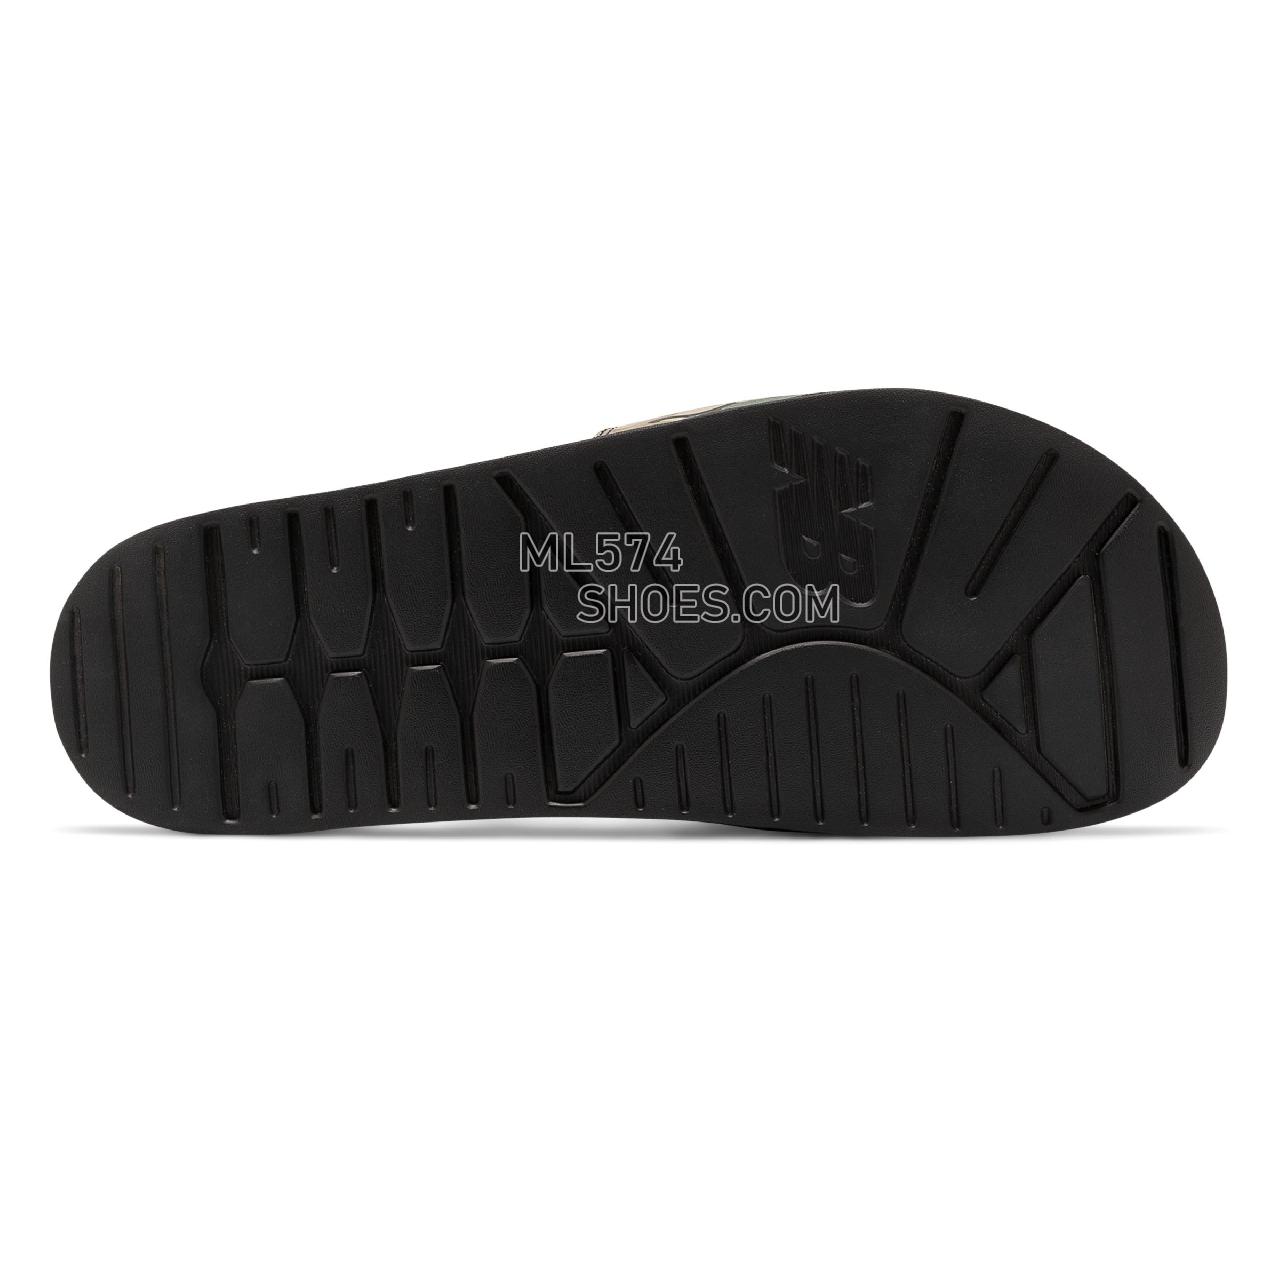 New Balance 200 - Men's Flip Flops - Black with Camo - SMF200CP